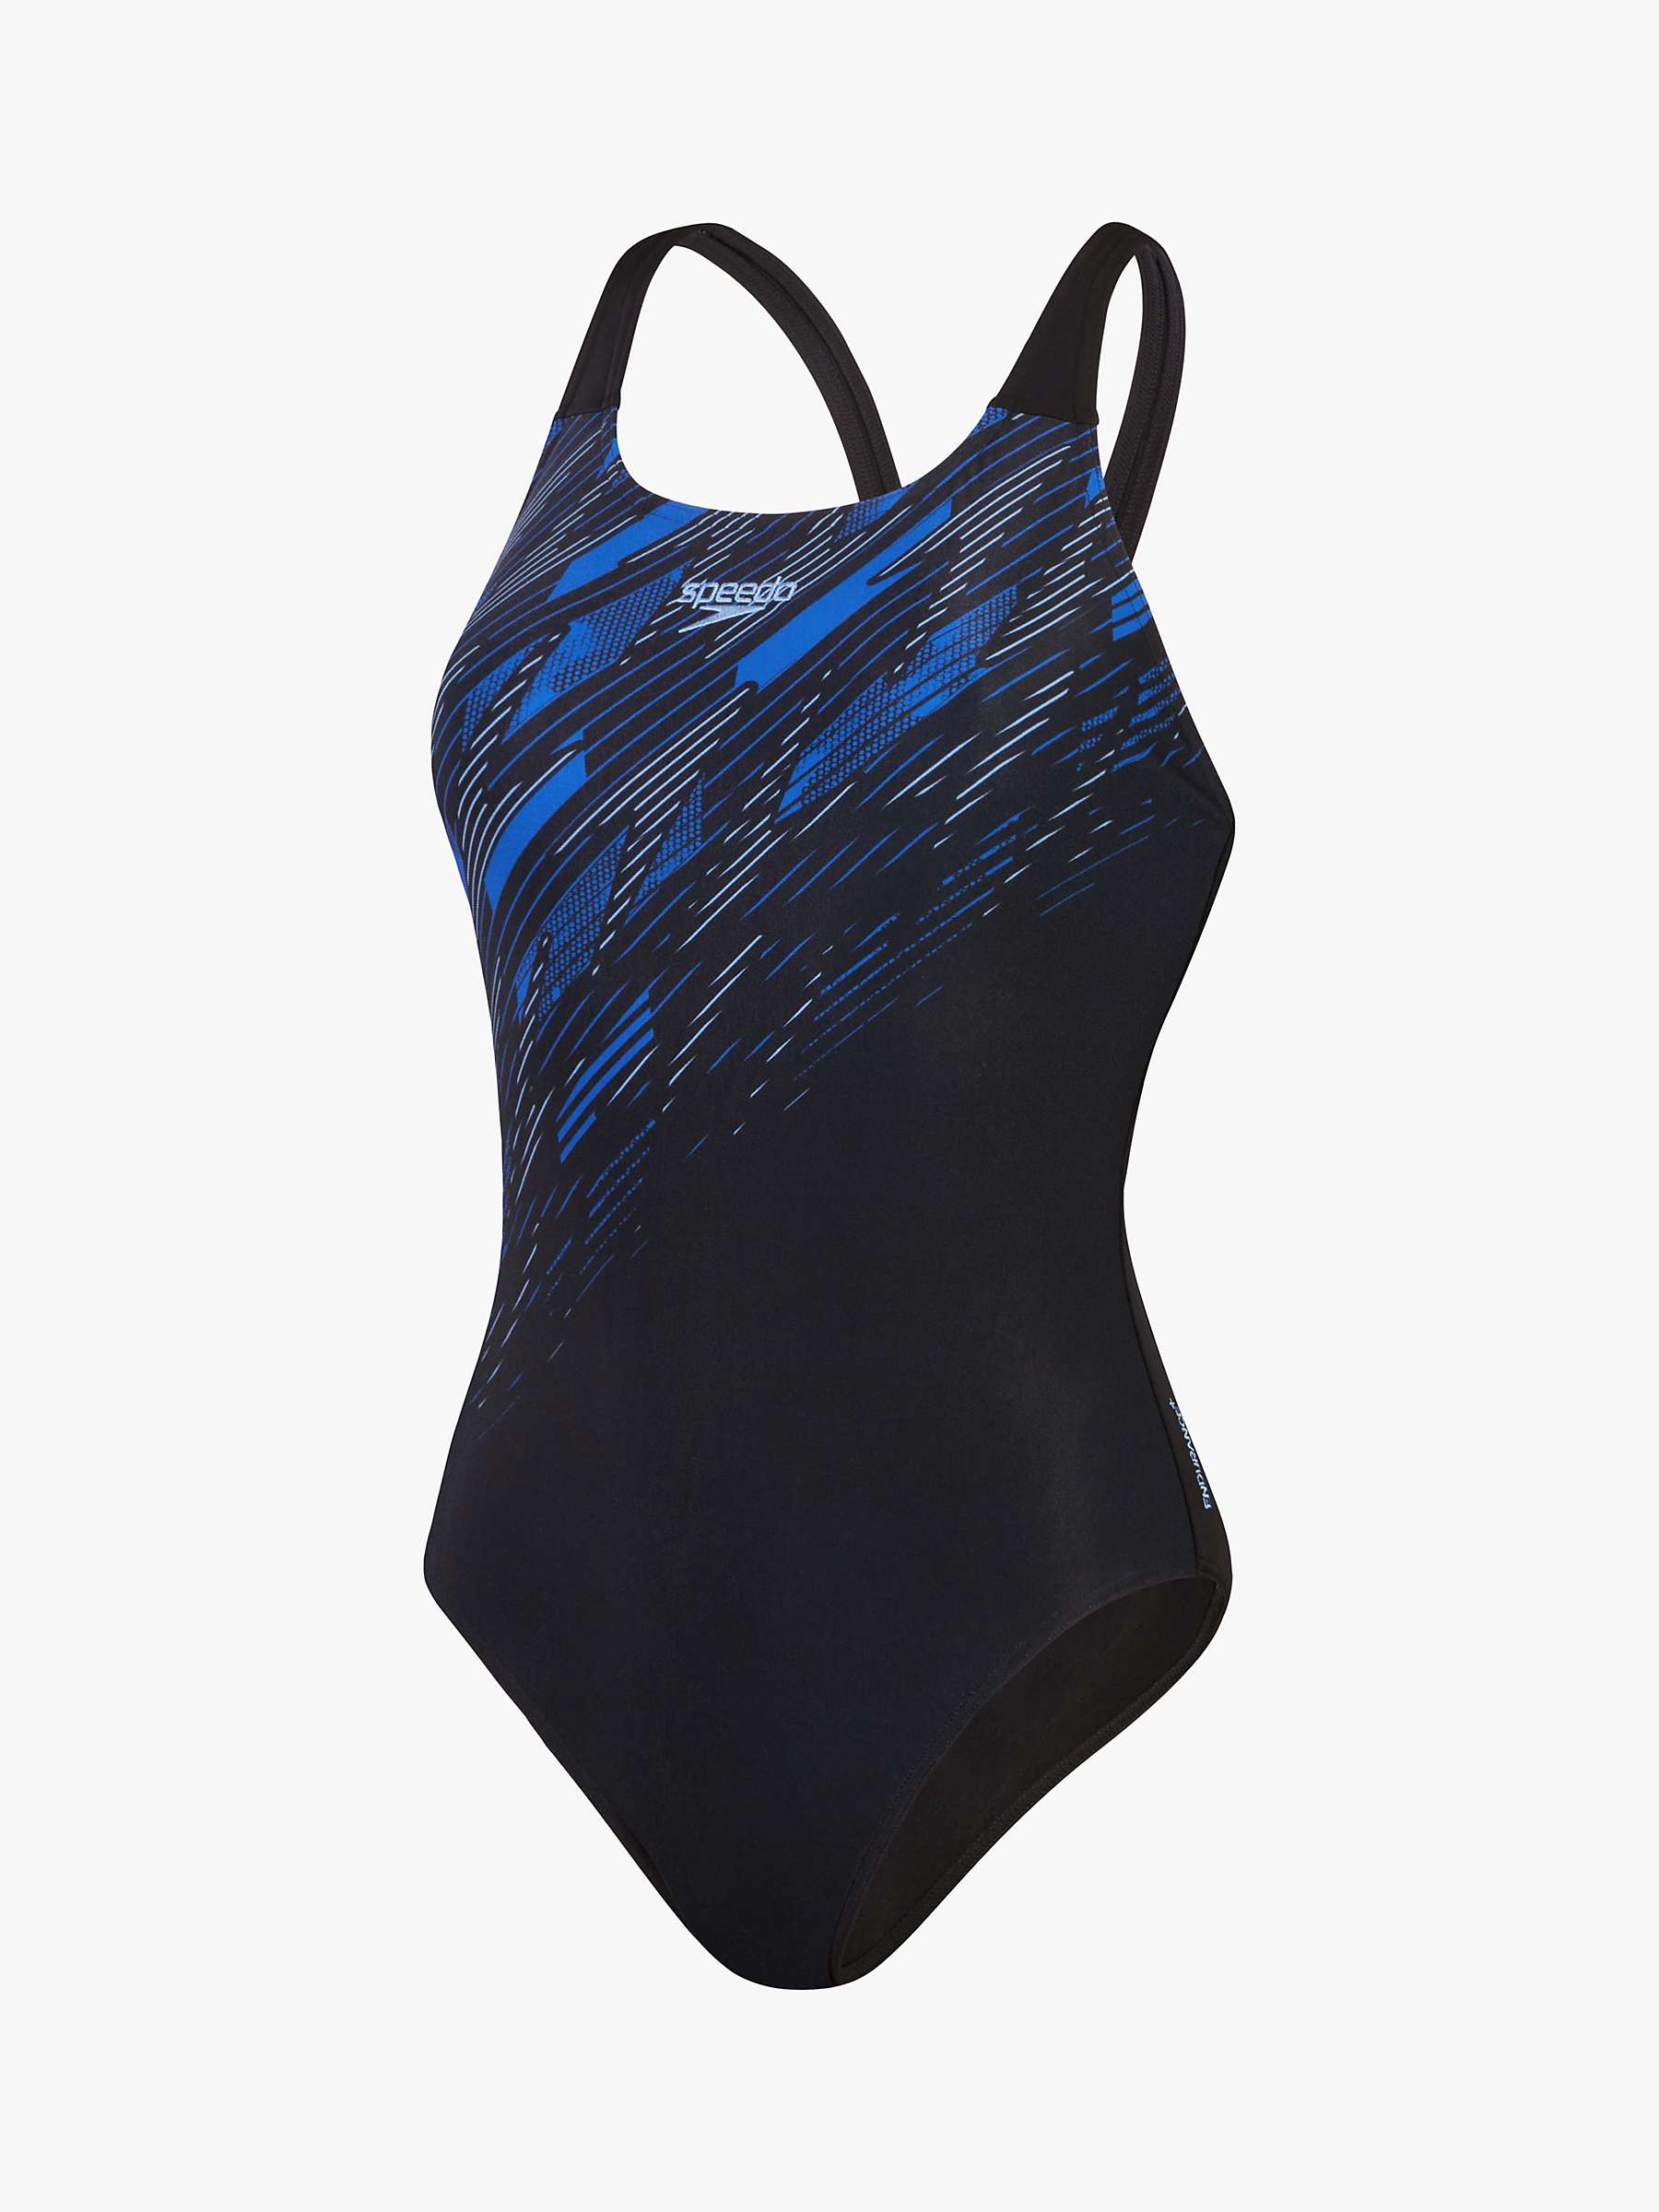 Buy Speedo Hyper Placement Muscleback Swimsuit, Black/Cobalt Online at johnlewis.com